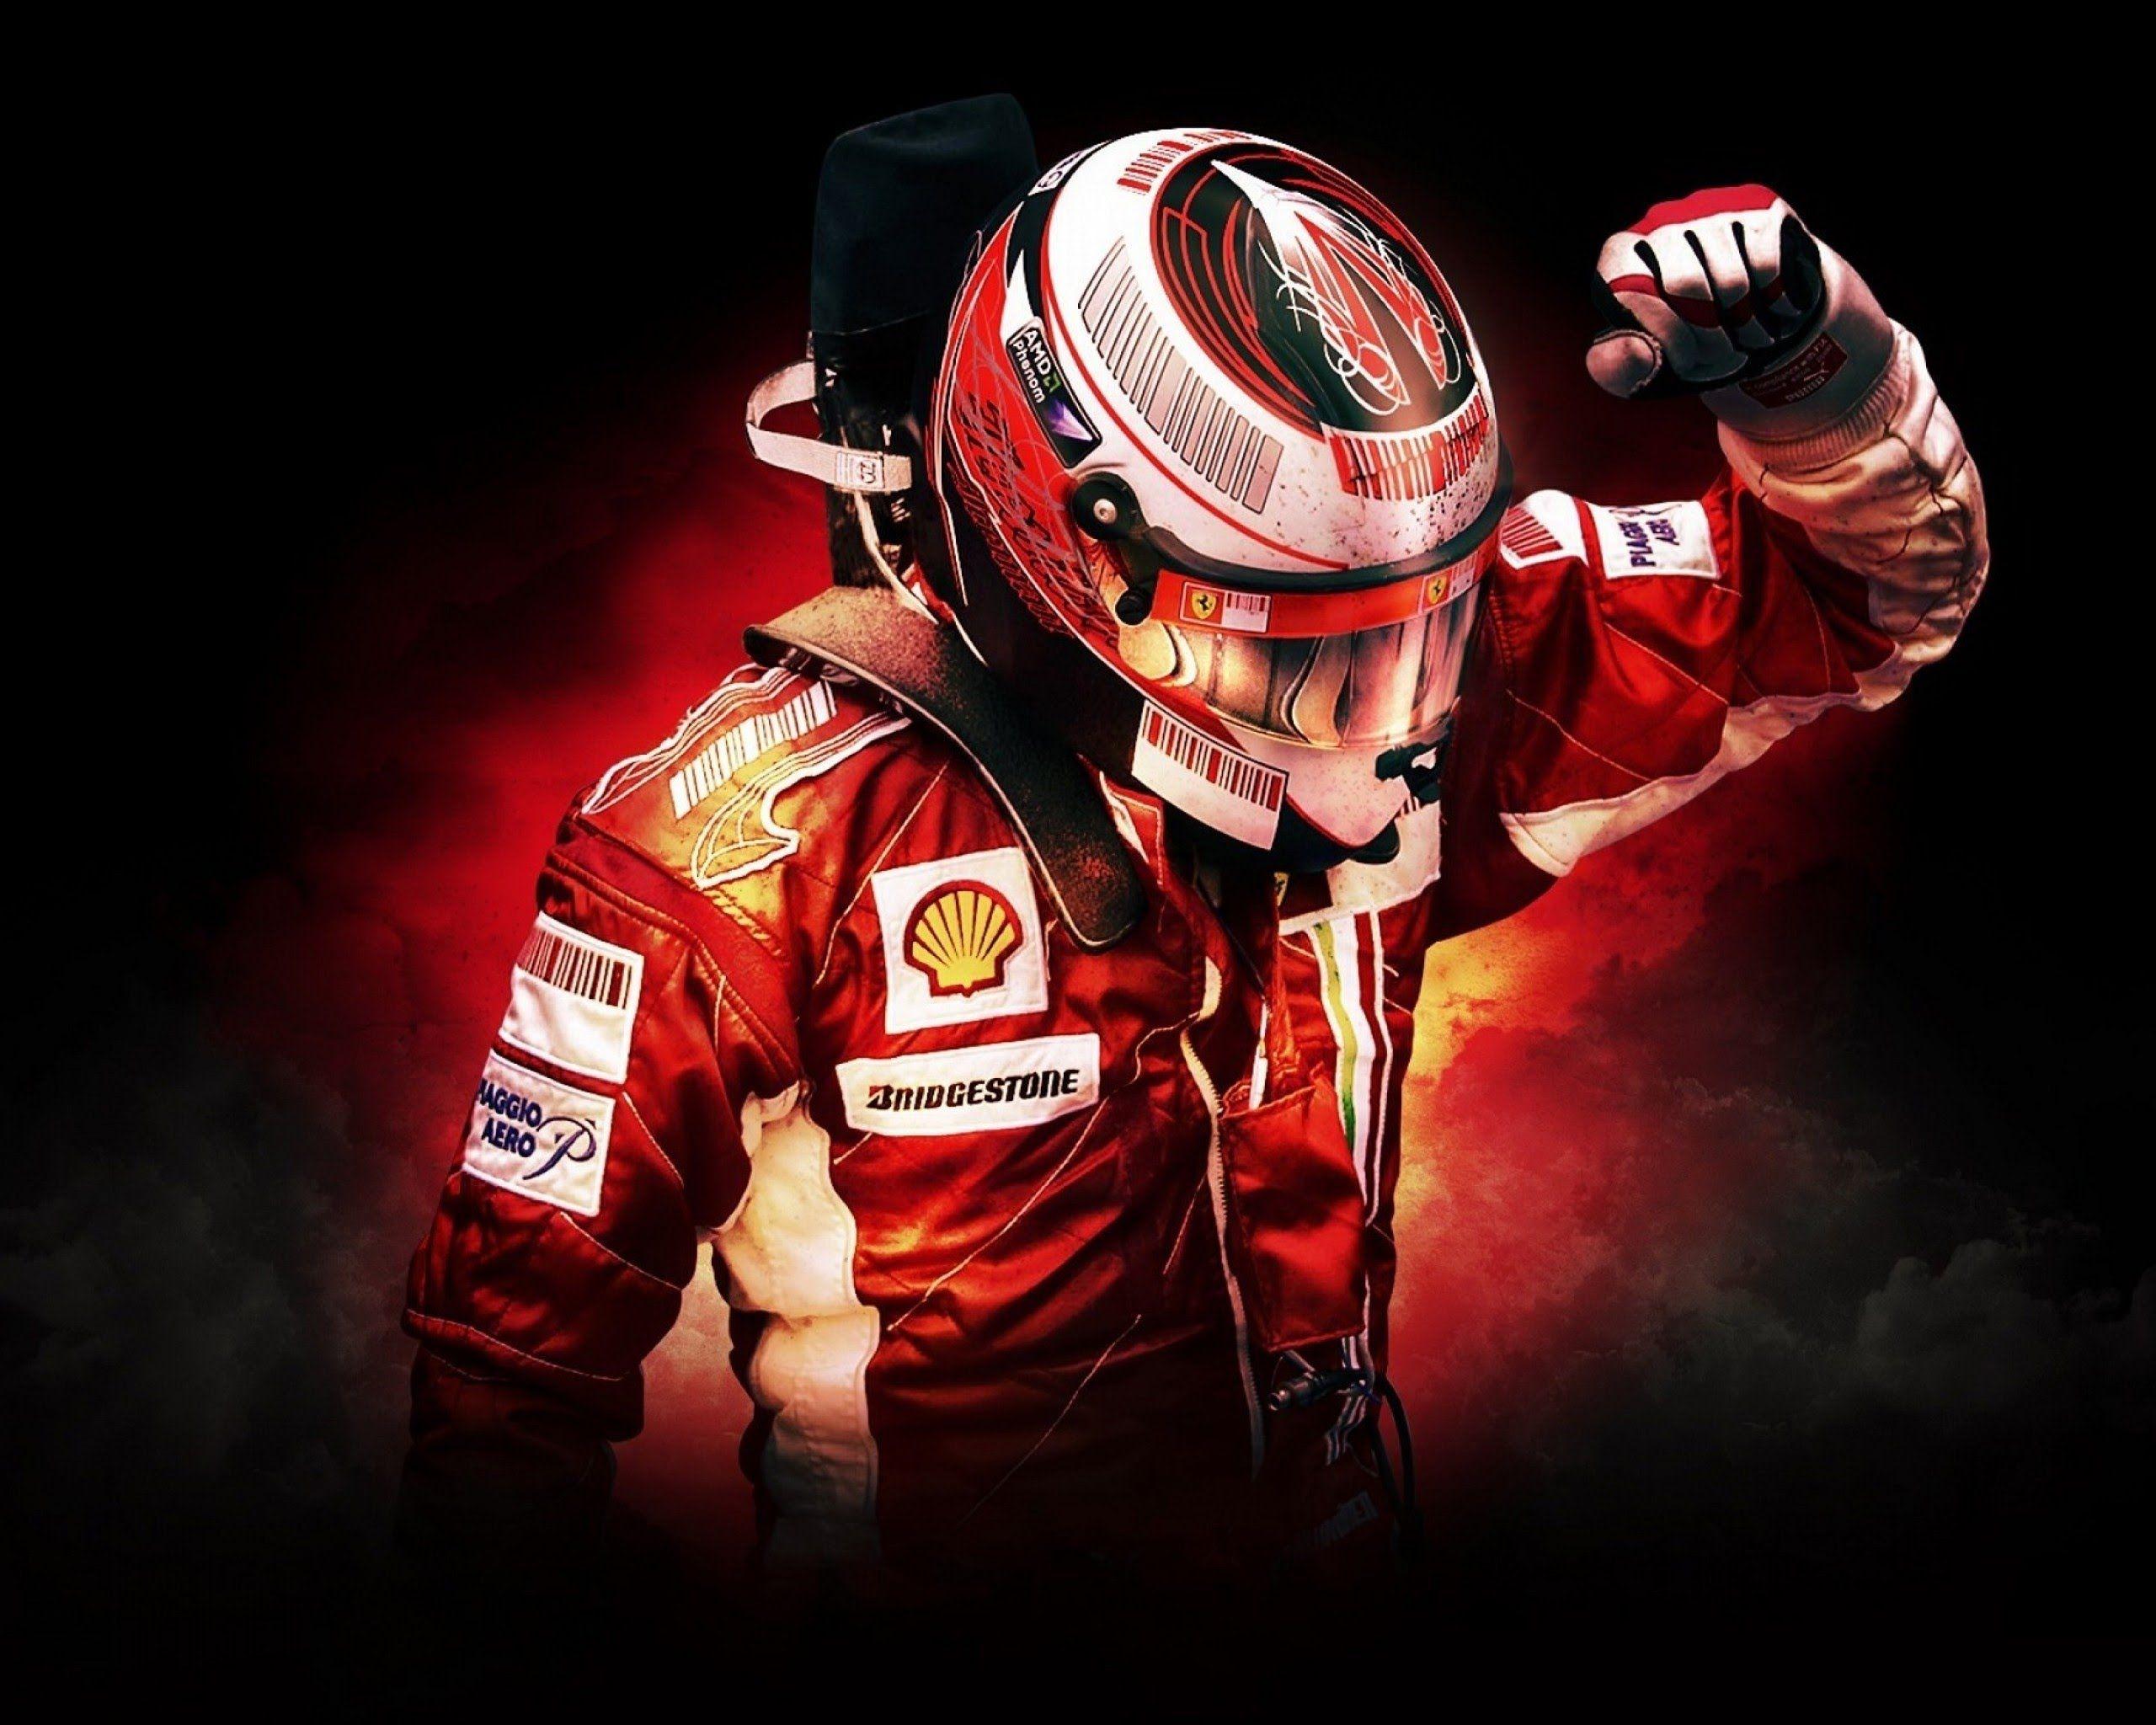 Fernando Alonso 2014 HD Wallpaper, Background Image